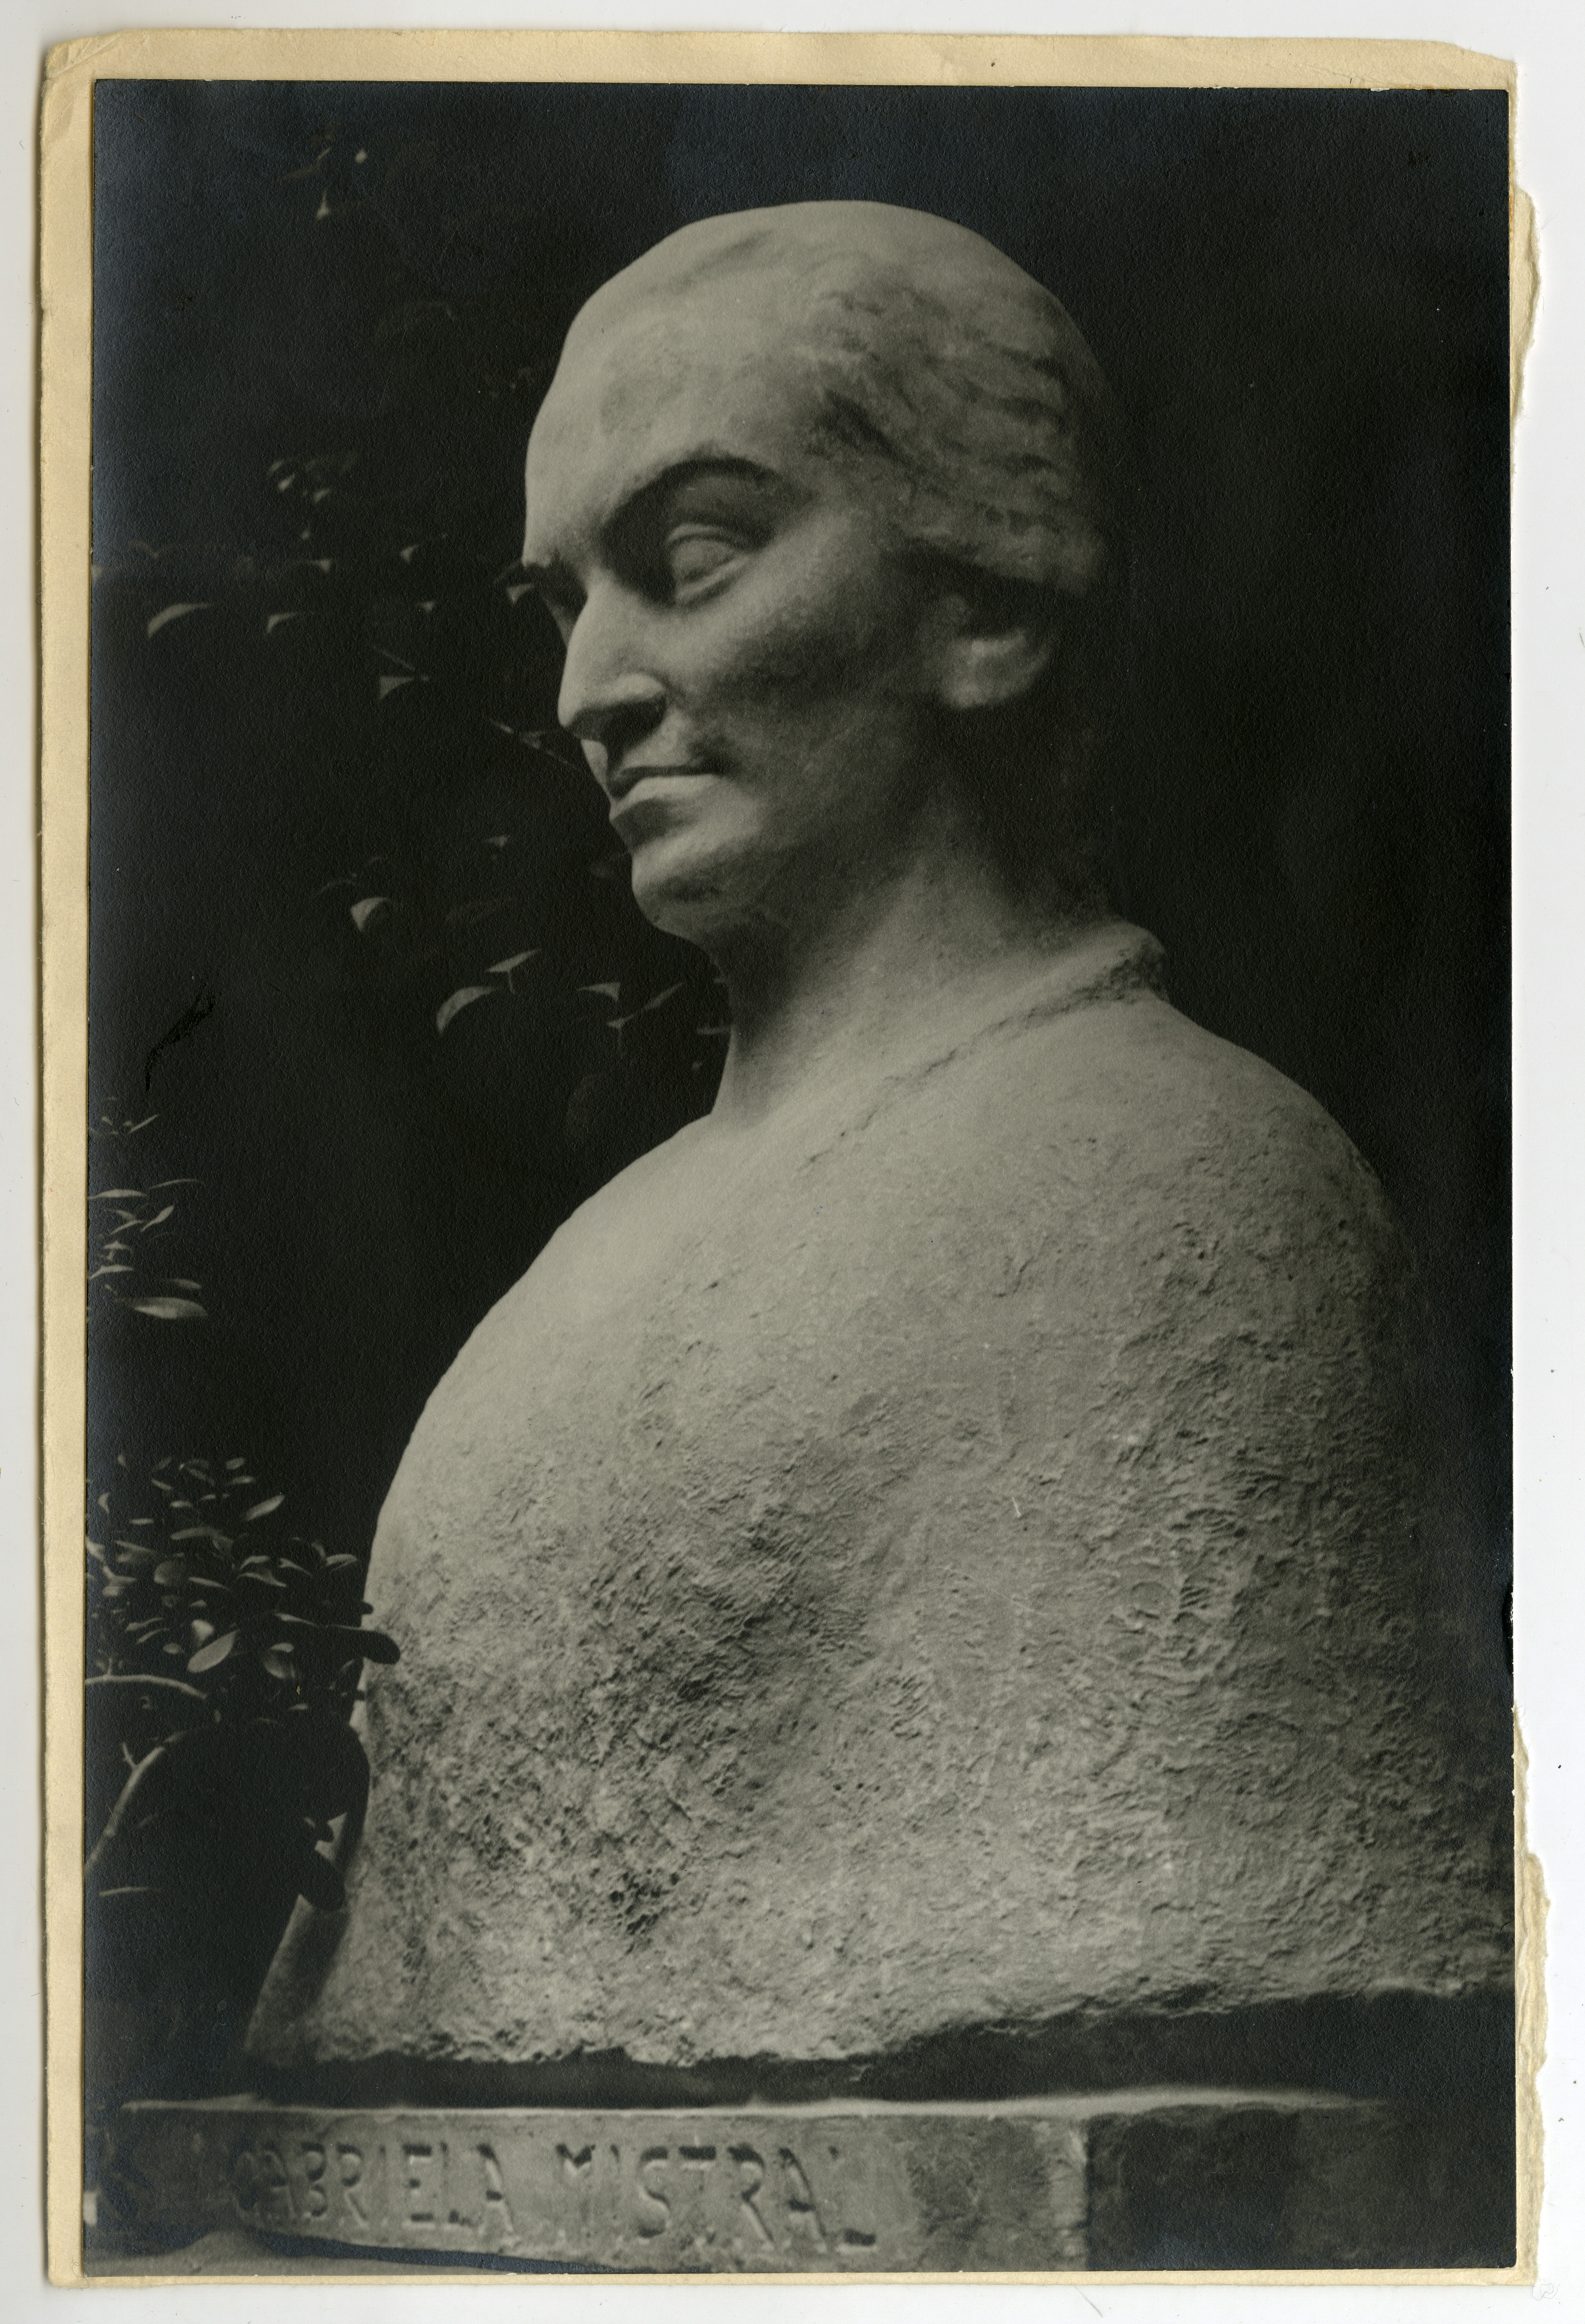 Busto de Gabriela Mistral realizado por Laura Rodig